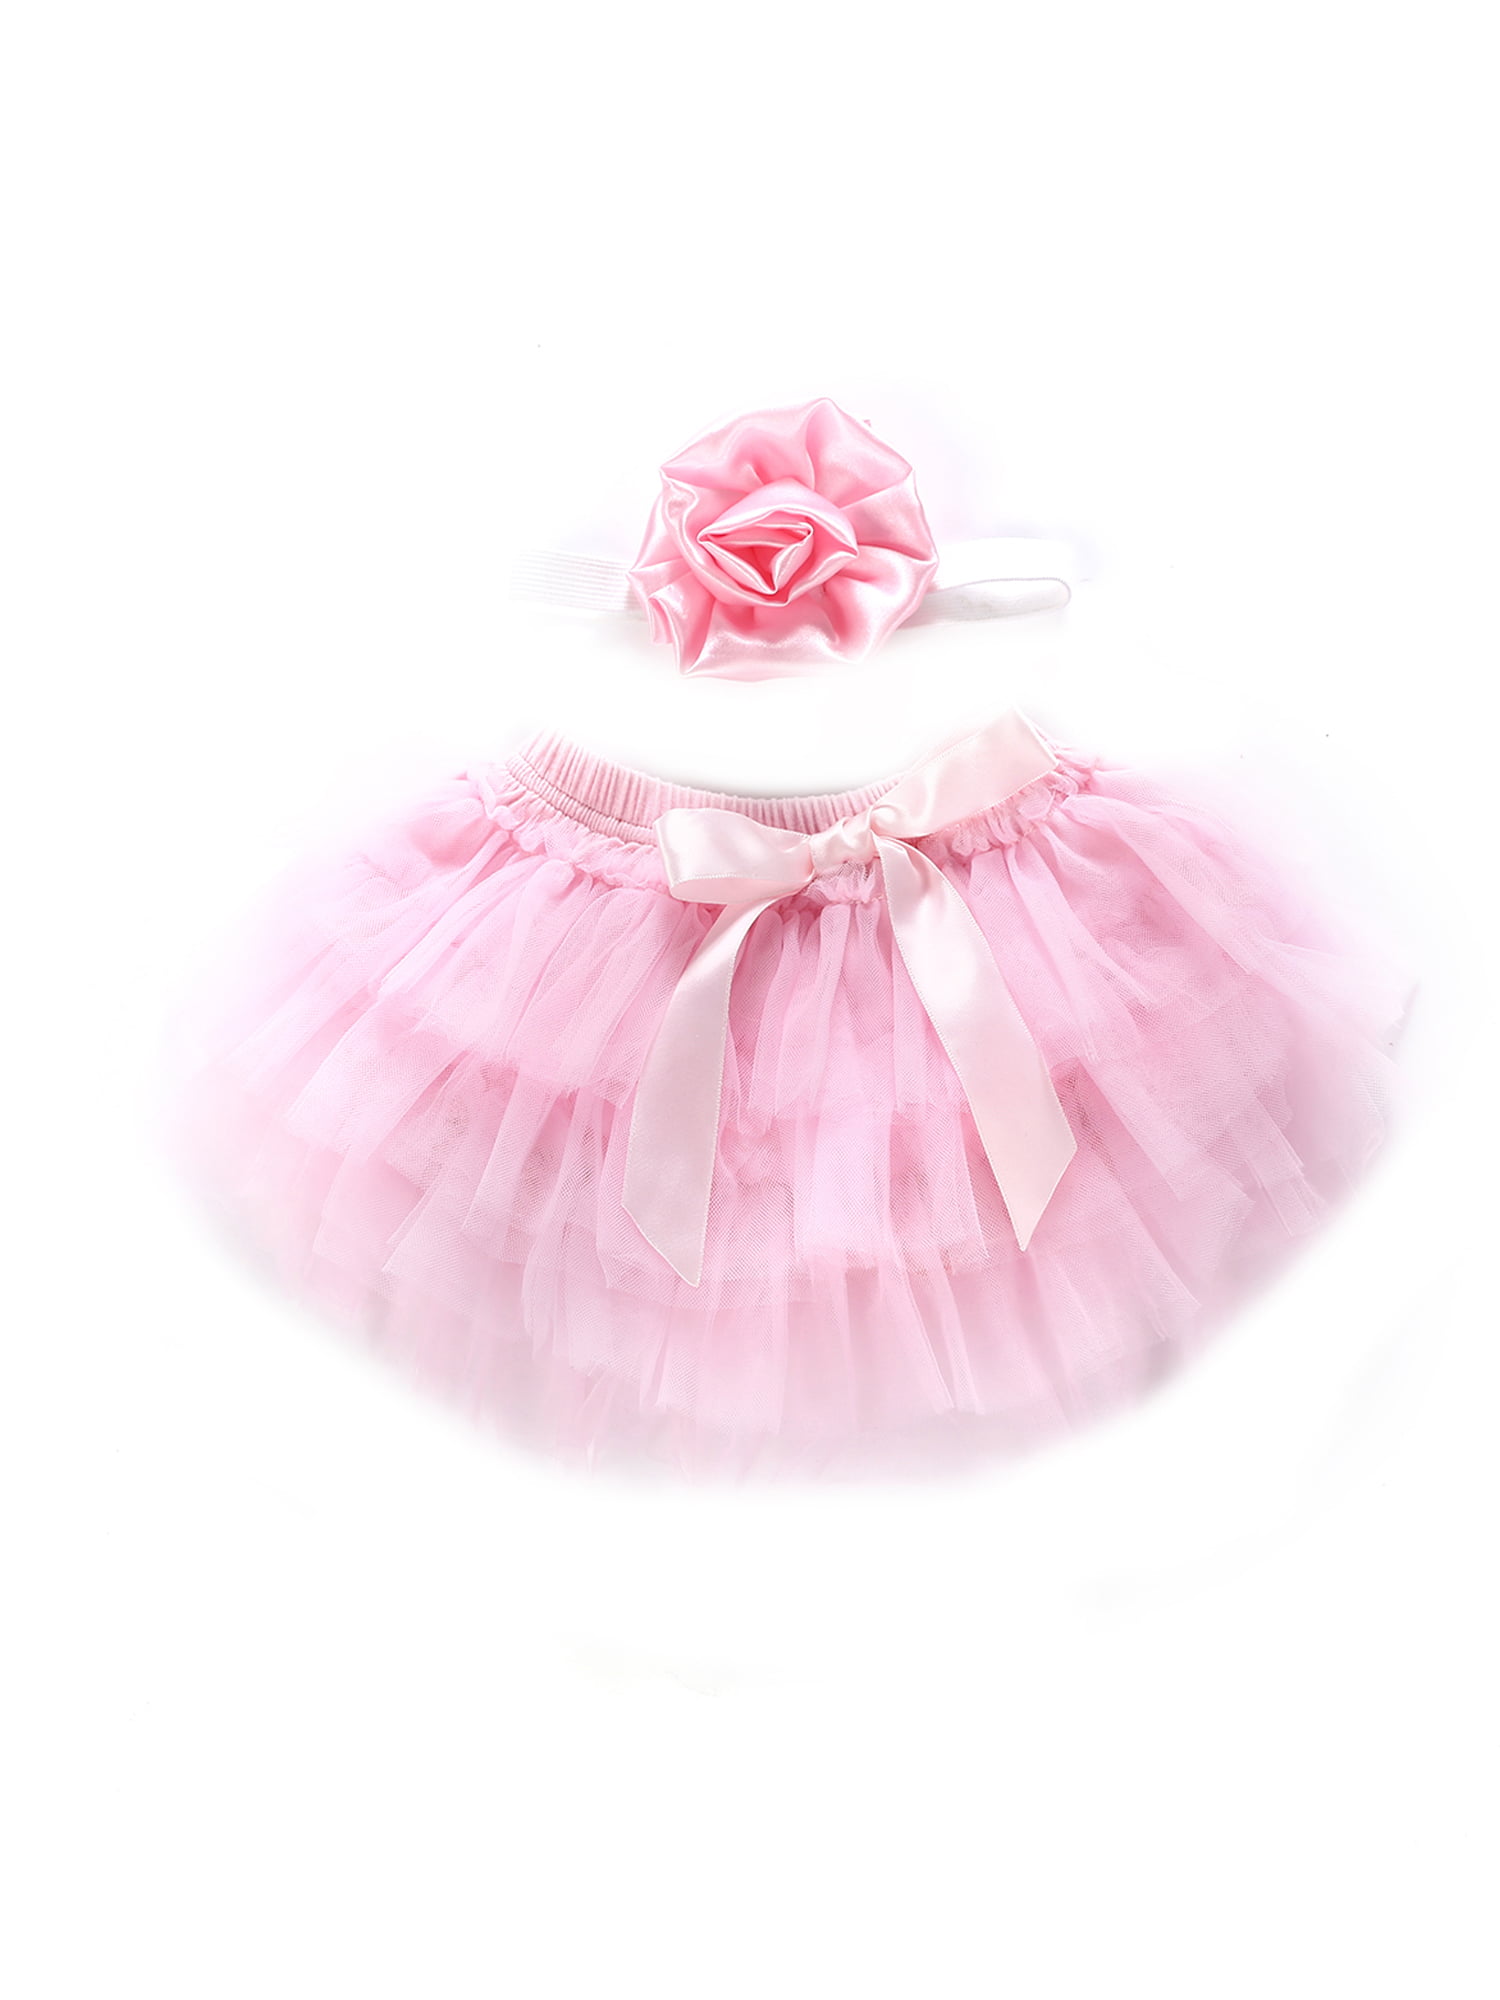 Newborn Infant Baby Girls Tutu Bloomer Short Bowknot Waist Tulle Layered Diaper Cover Skirts with Headband 